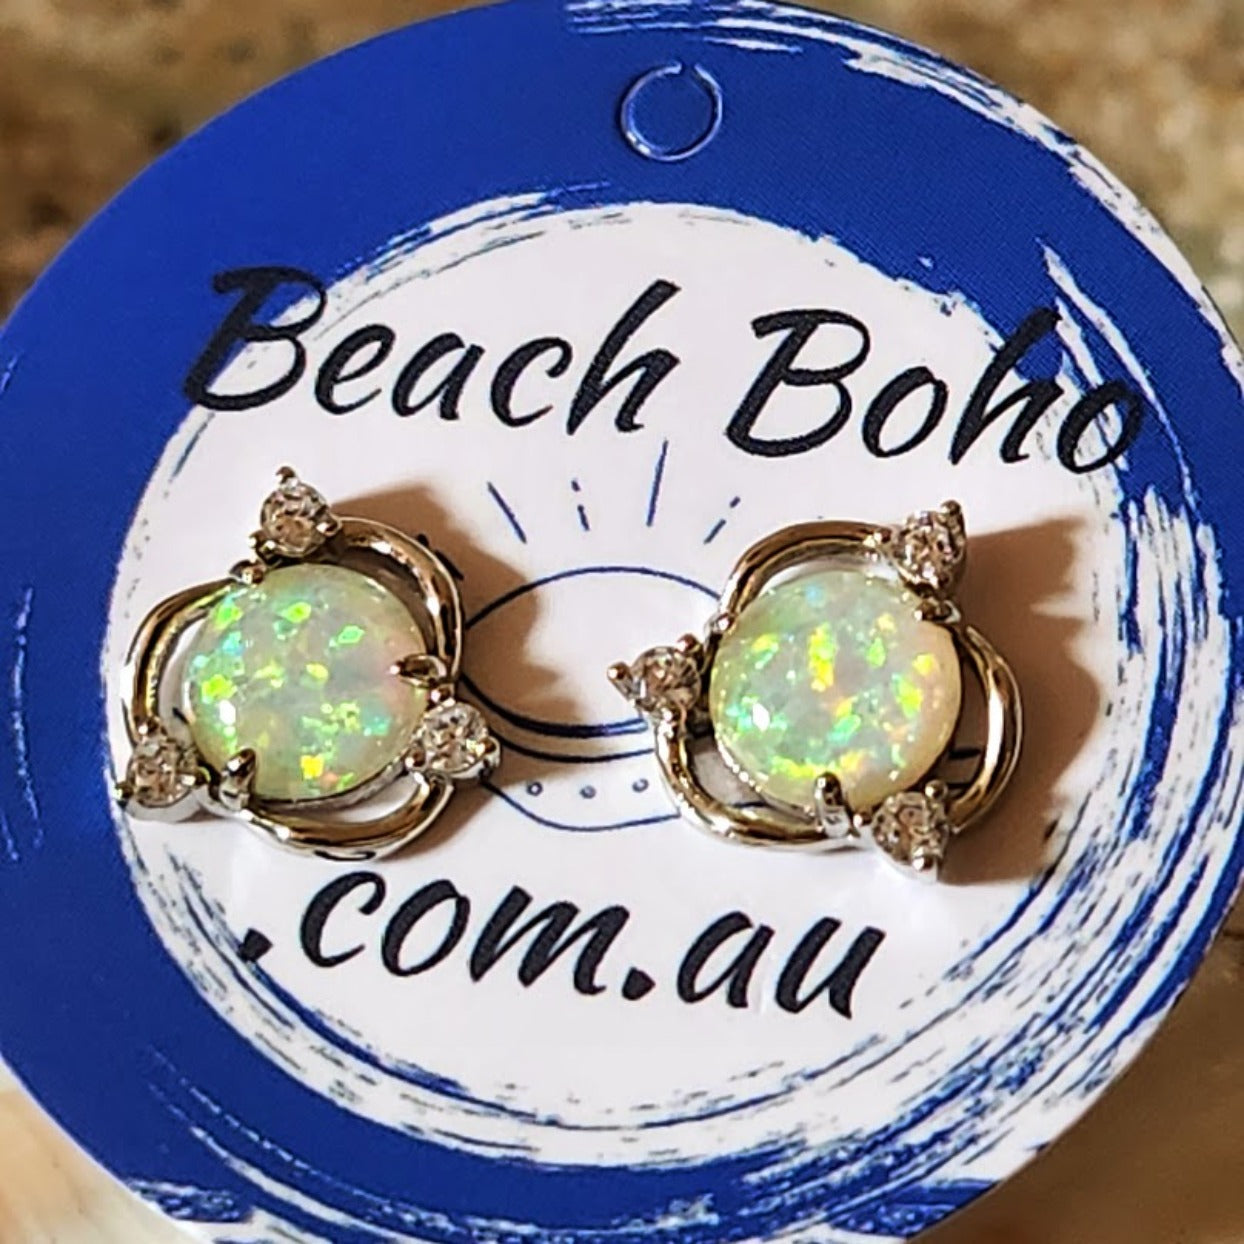 OPAL SILVER STAR - OPALITE / CUBIC ZIRCONIA STUD EARRINGS - Premium earrings from www.beachboho.com.au - Just $35! Shop now at www.beachboho.com.au